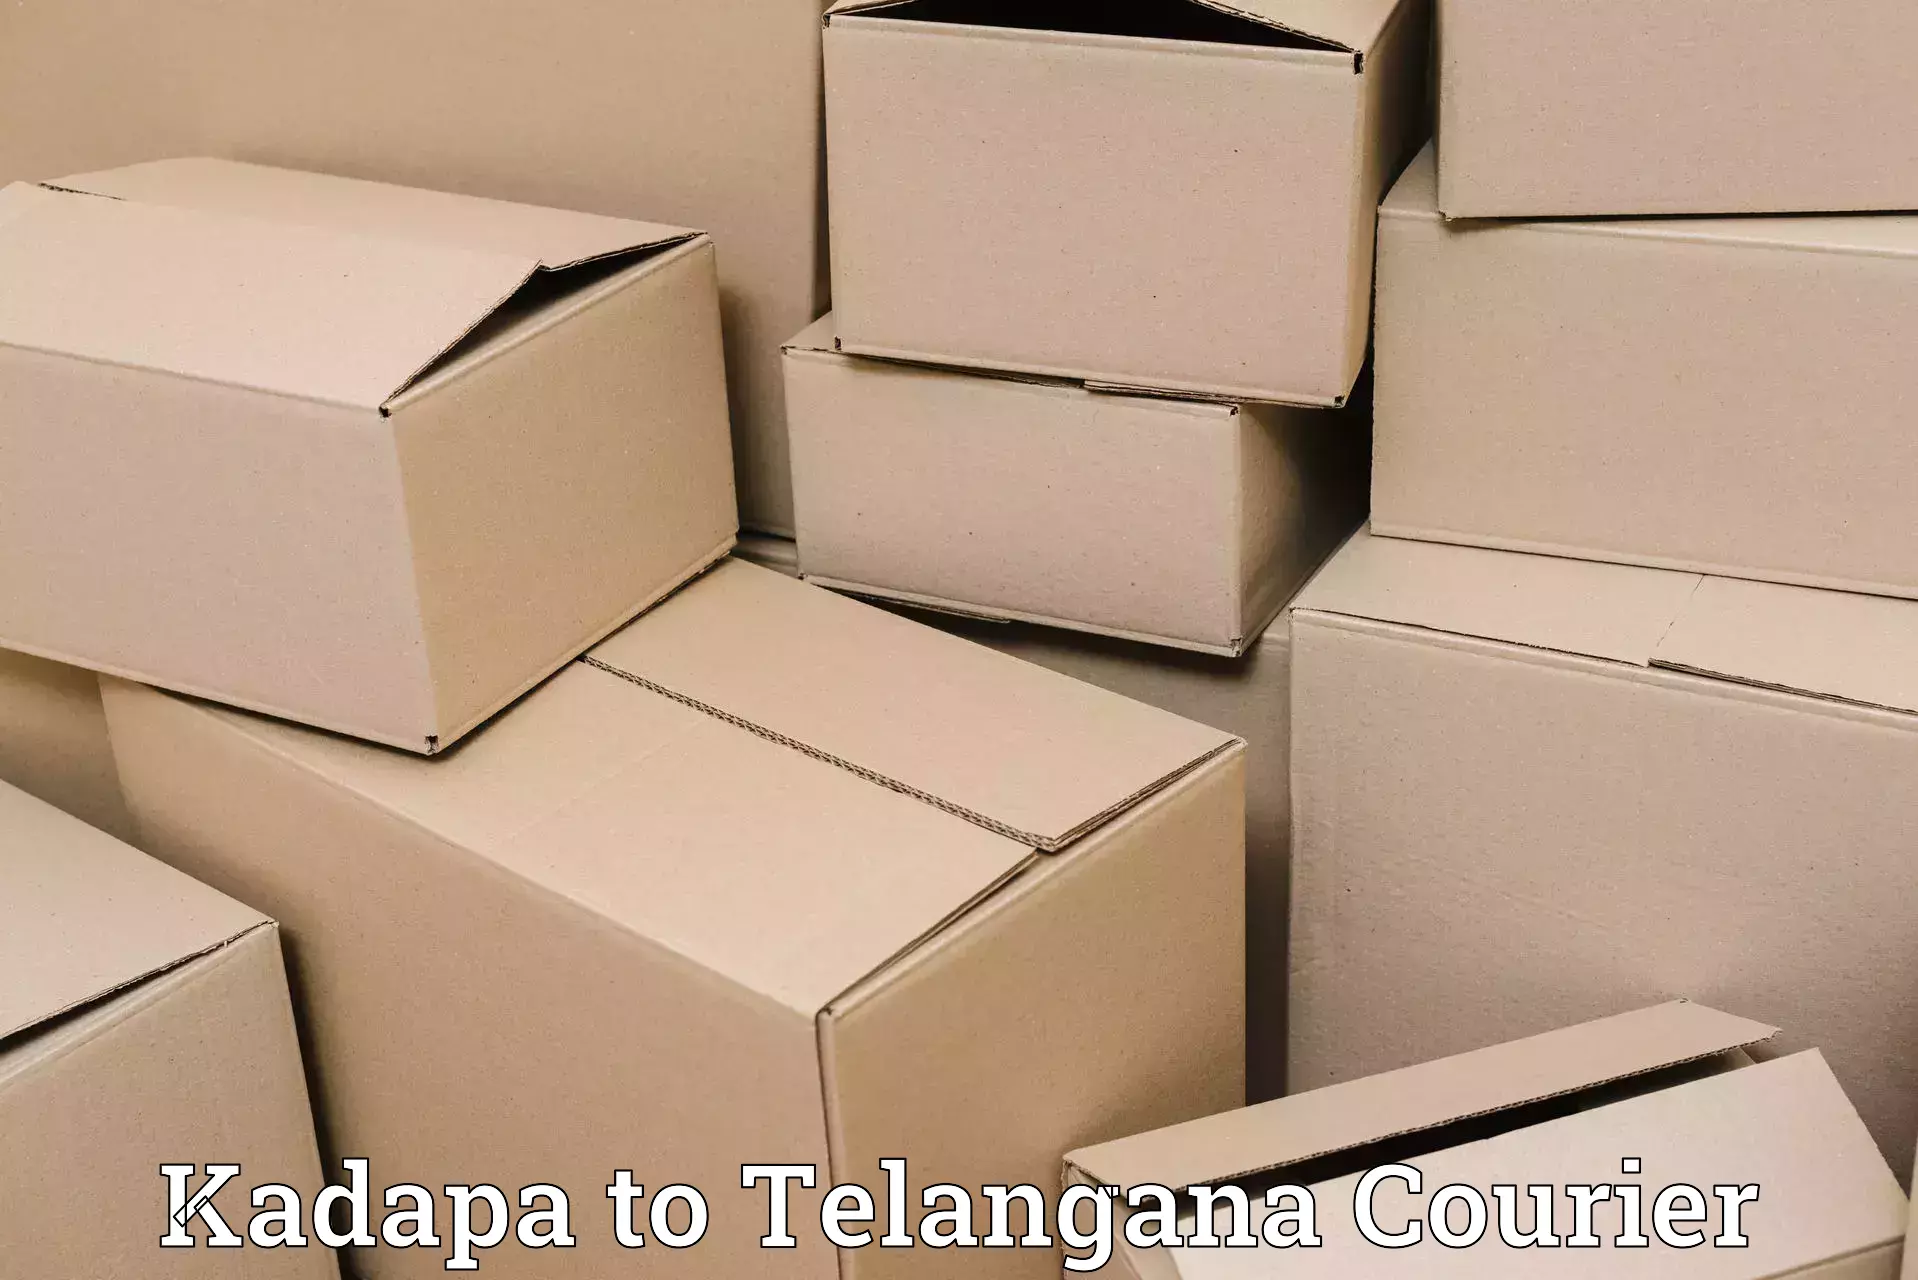 Online package tracking Kadapa to Telangana